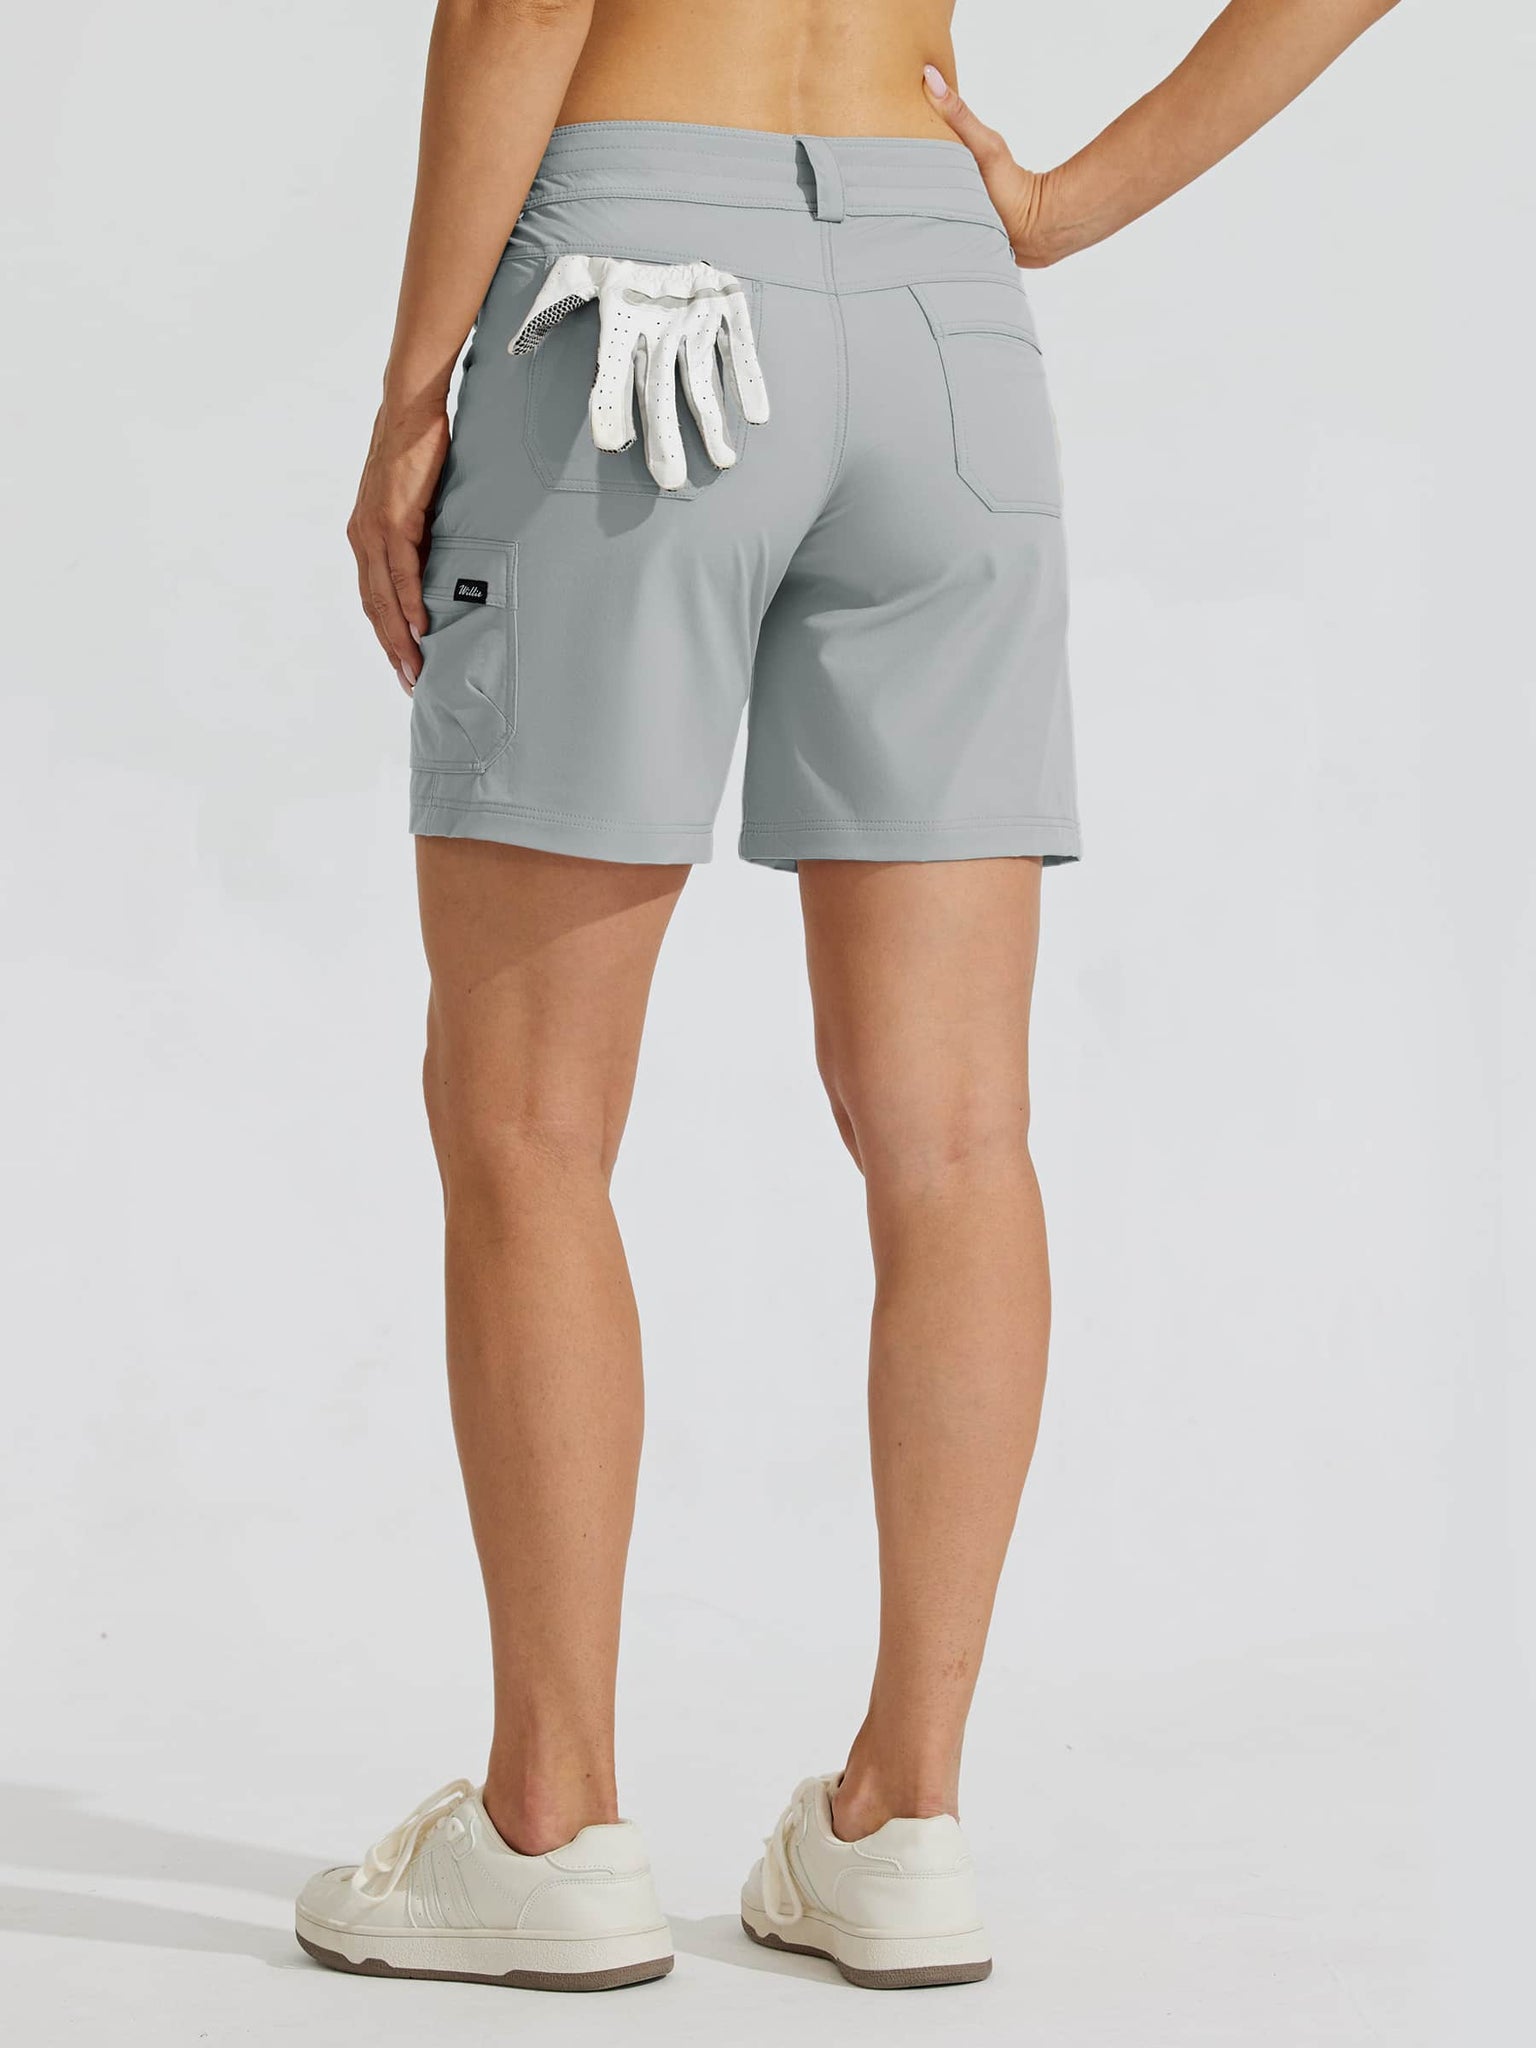 Women's Outdoor Pro Shorts Gray_model1